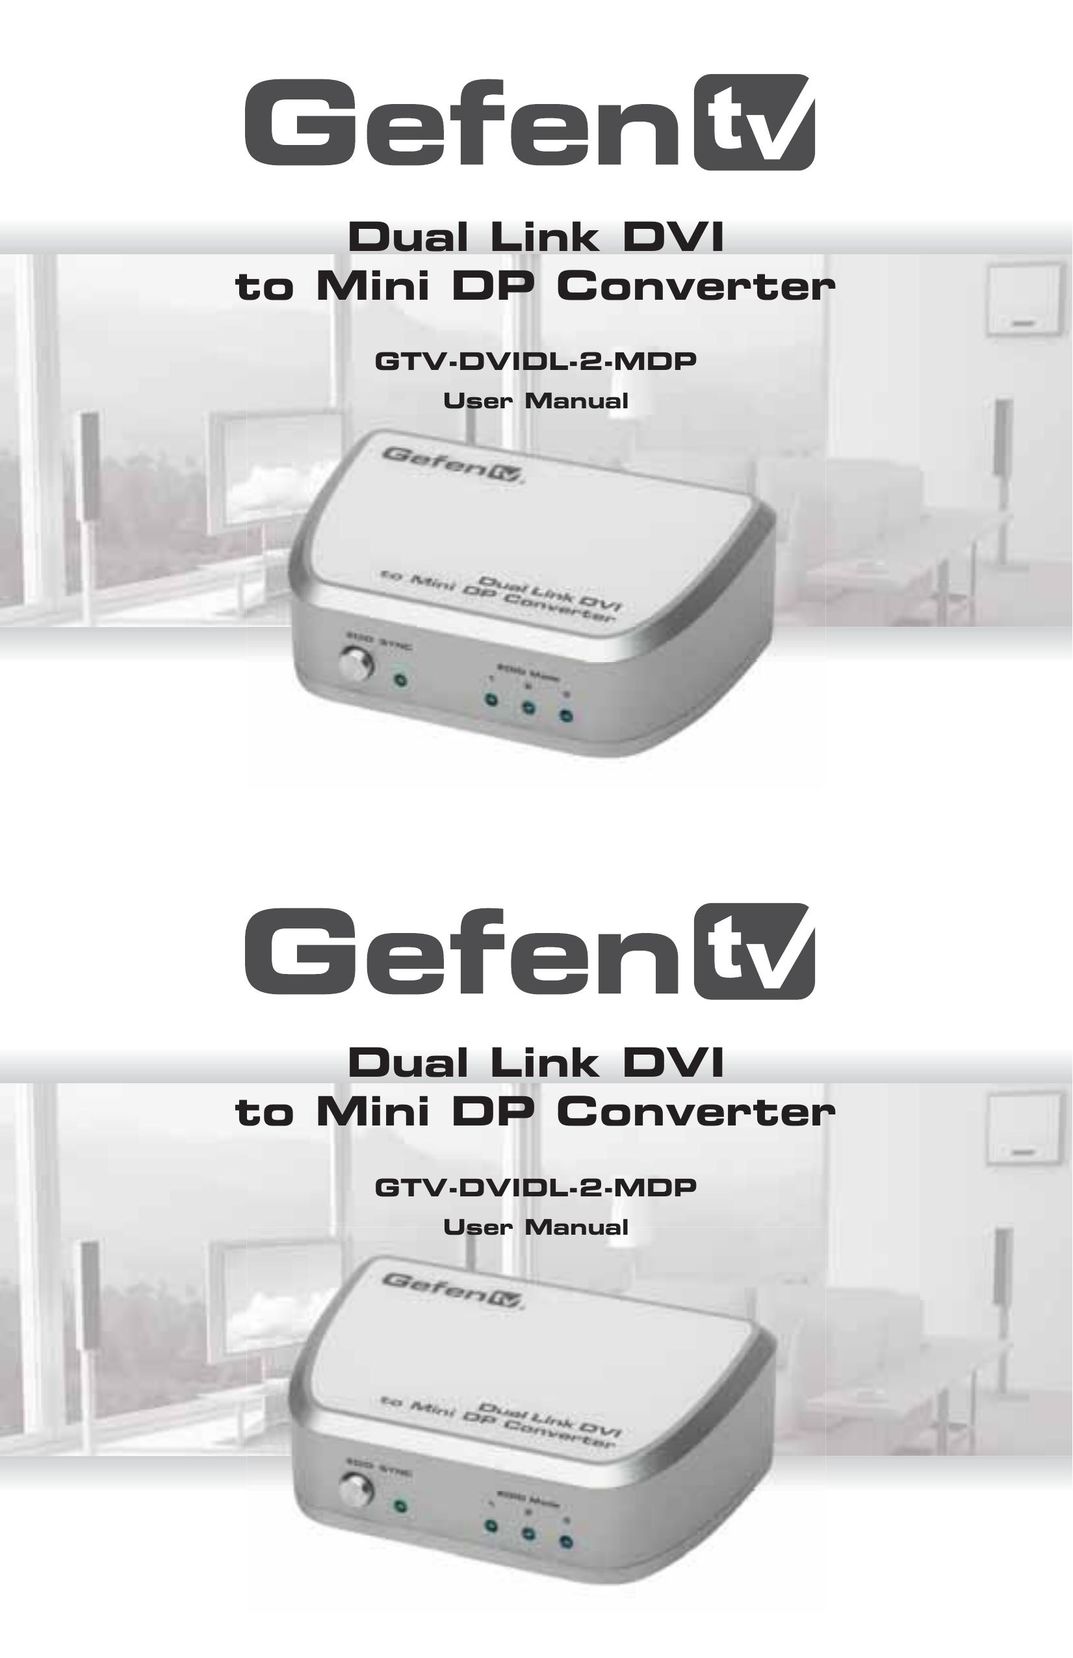 Gefen GTV-DVIDL-2-MDP TV Converter Box User Manual